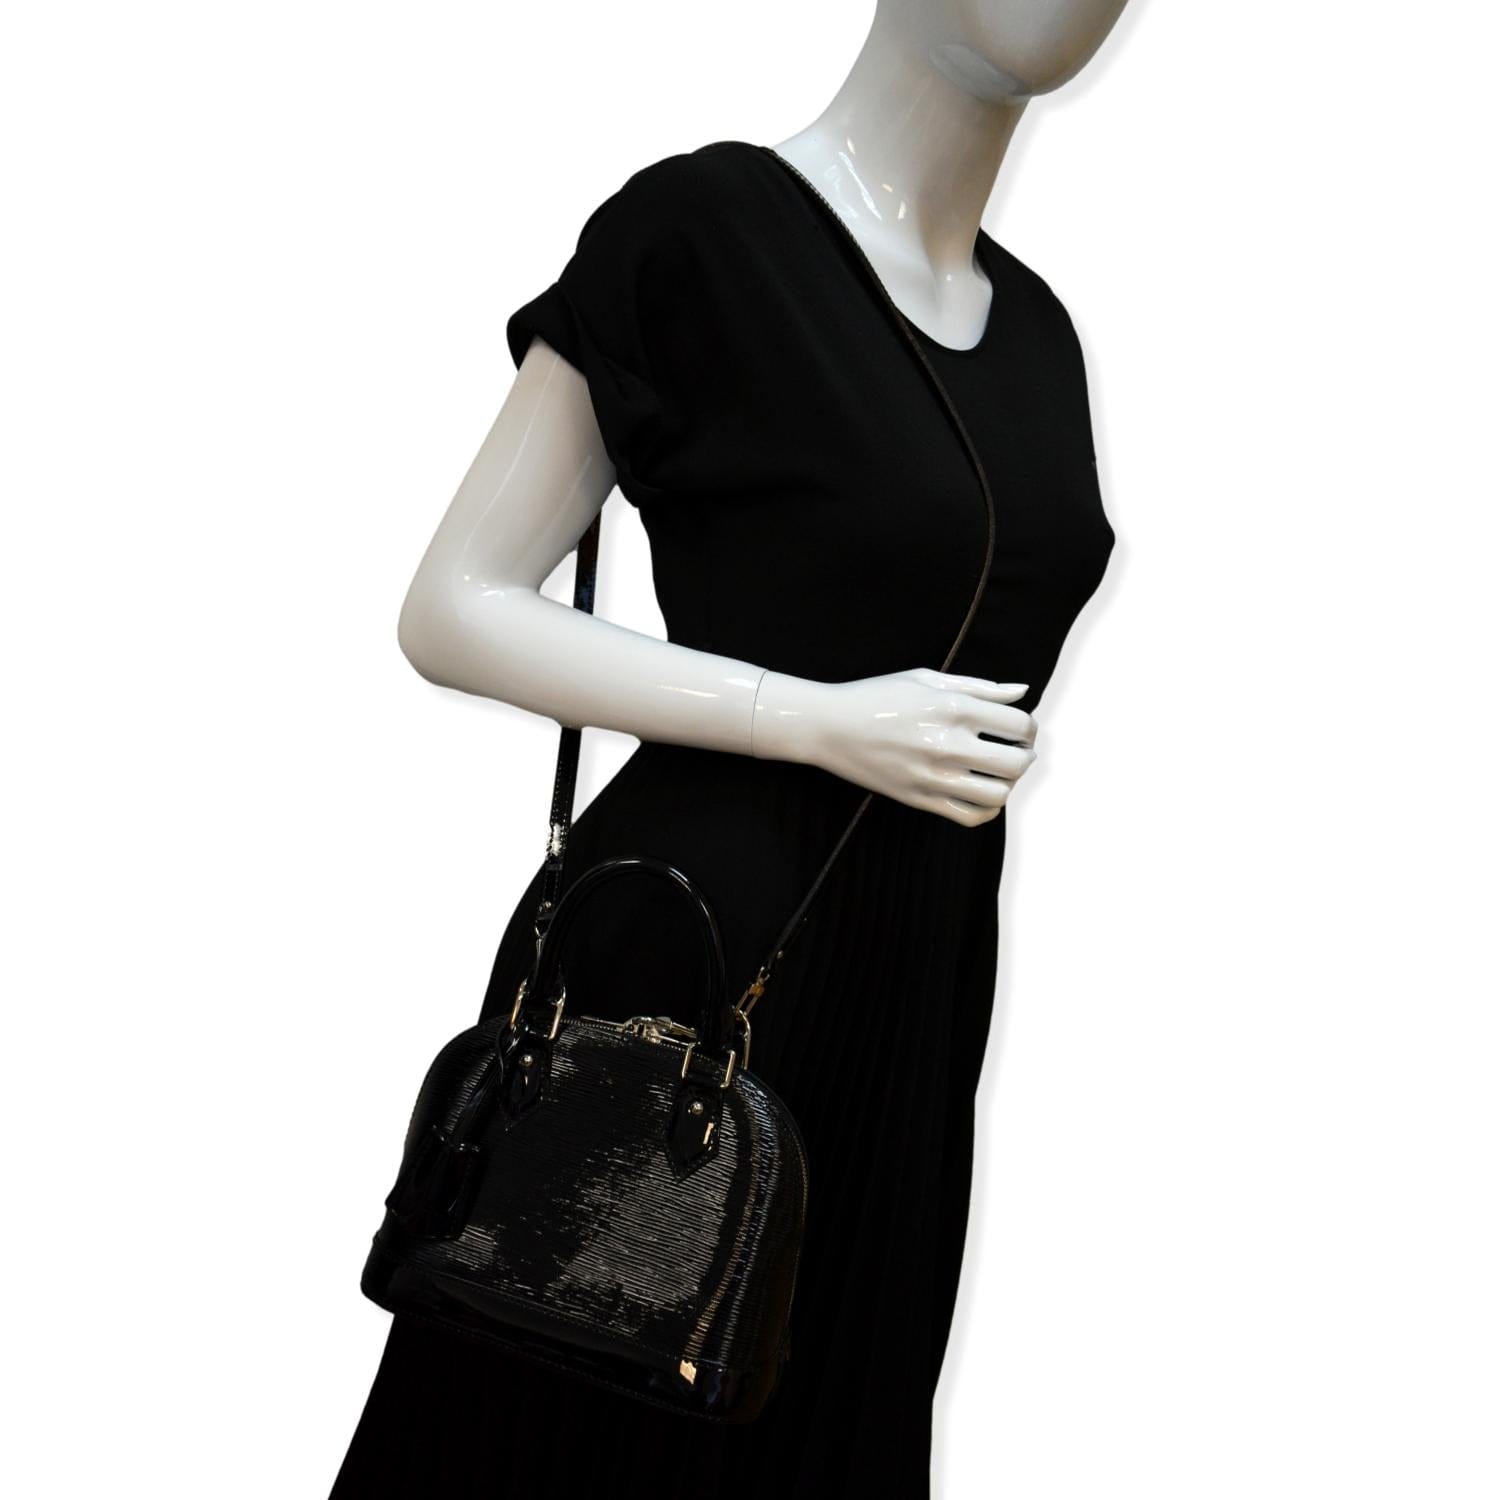 Louis Vuitton Alma Bb Leather Handbag